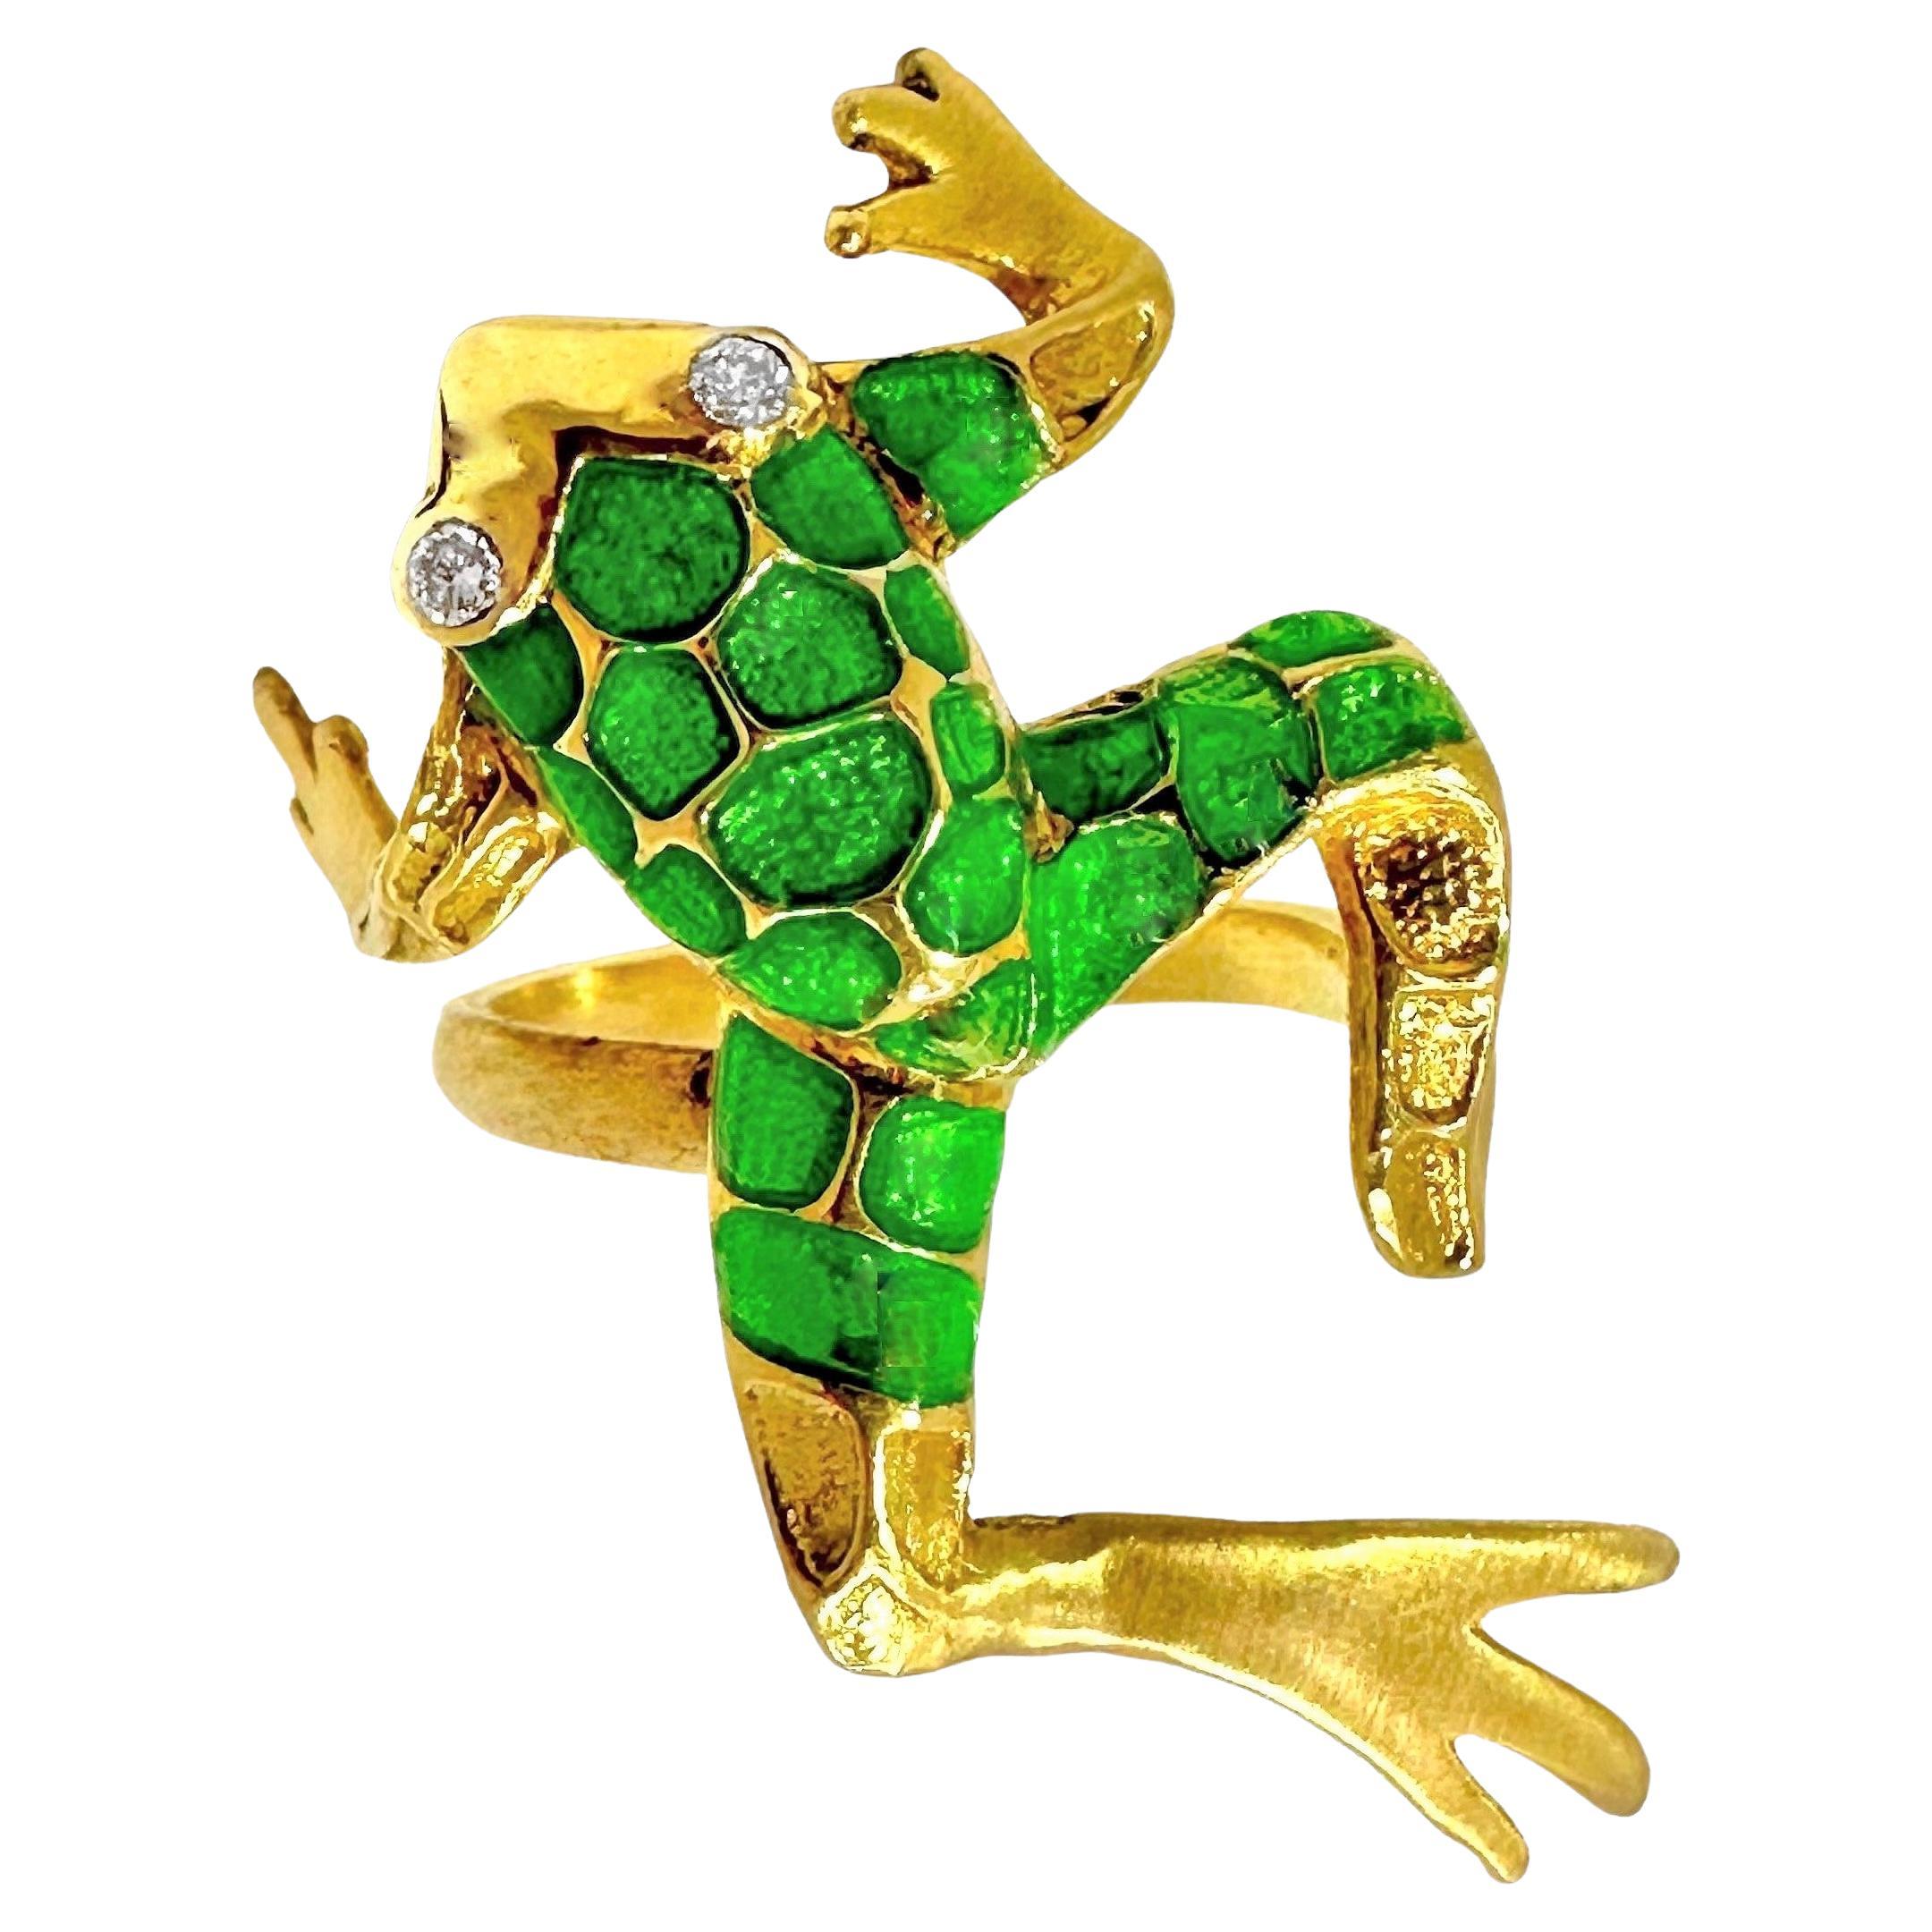 Lifelike Frog Motif Ring in 18K Yellow Gold, Green Enamel and Diamonds For Sale